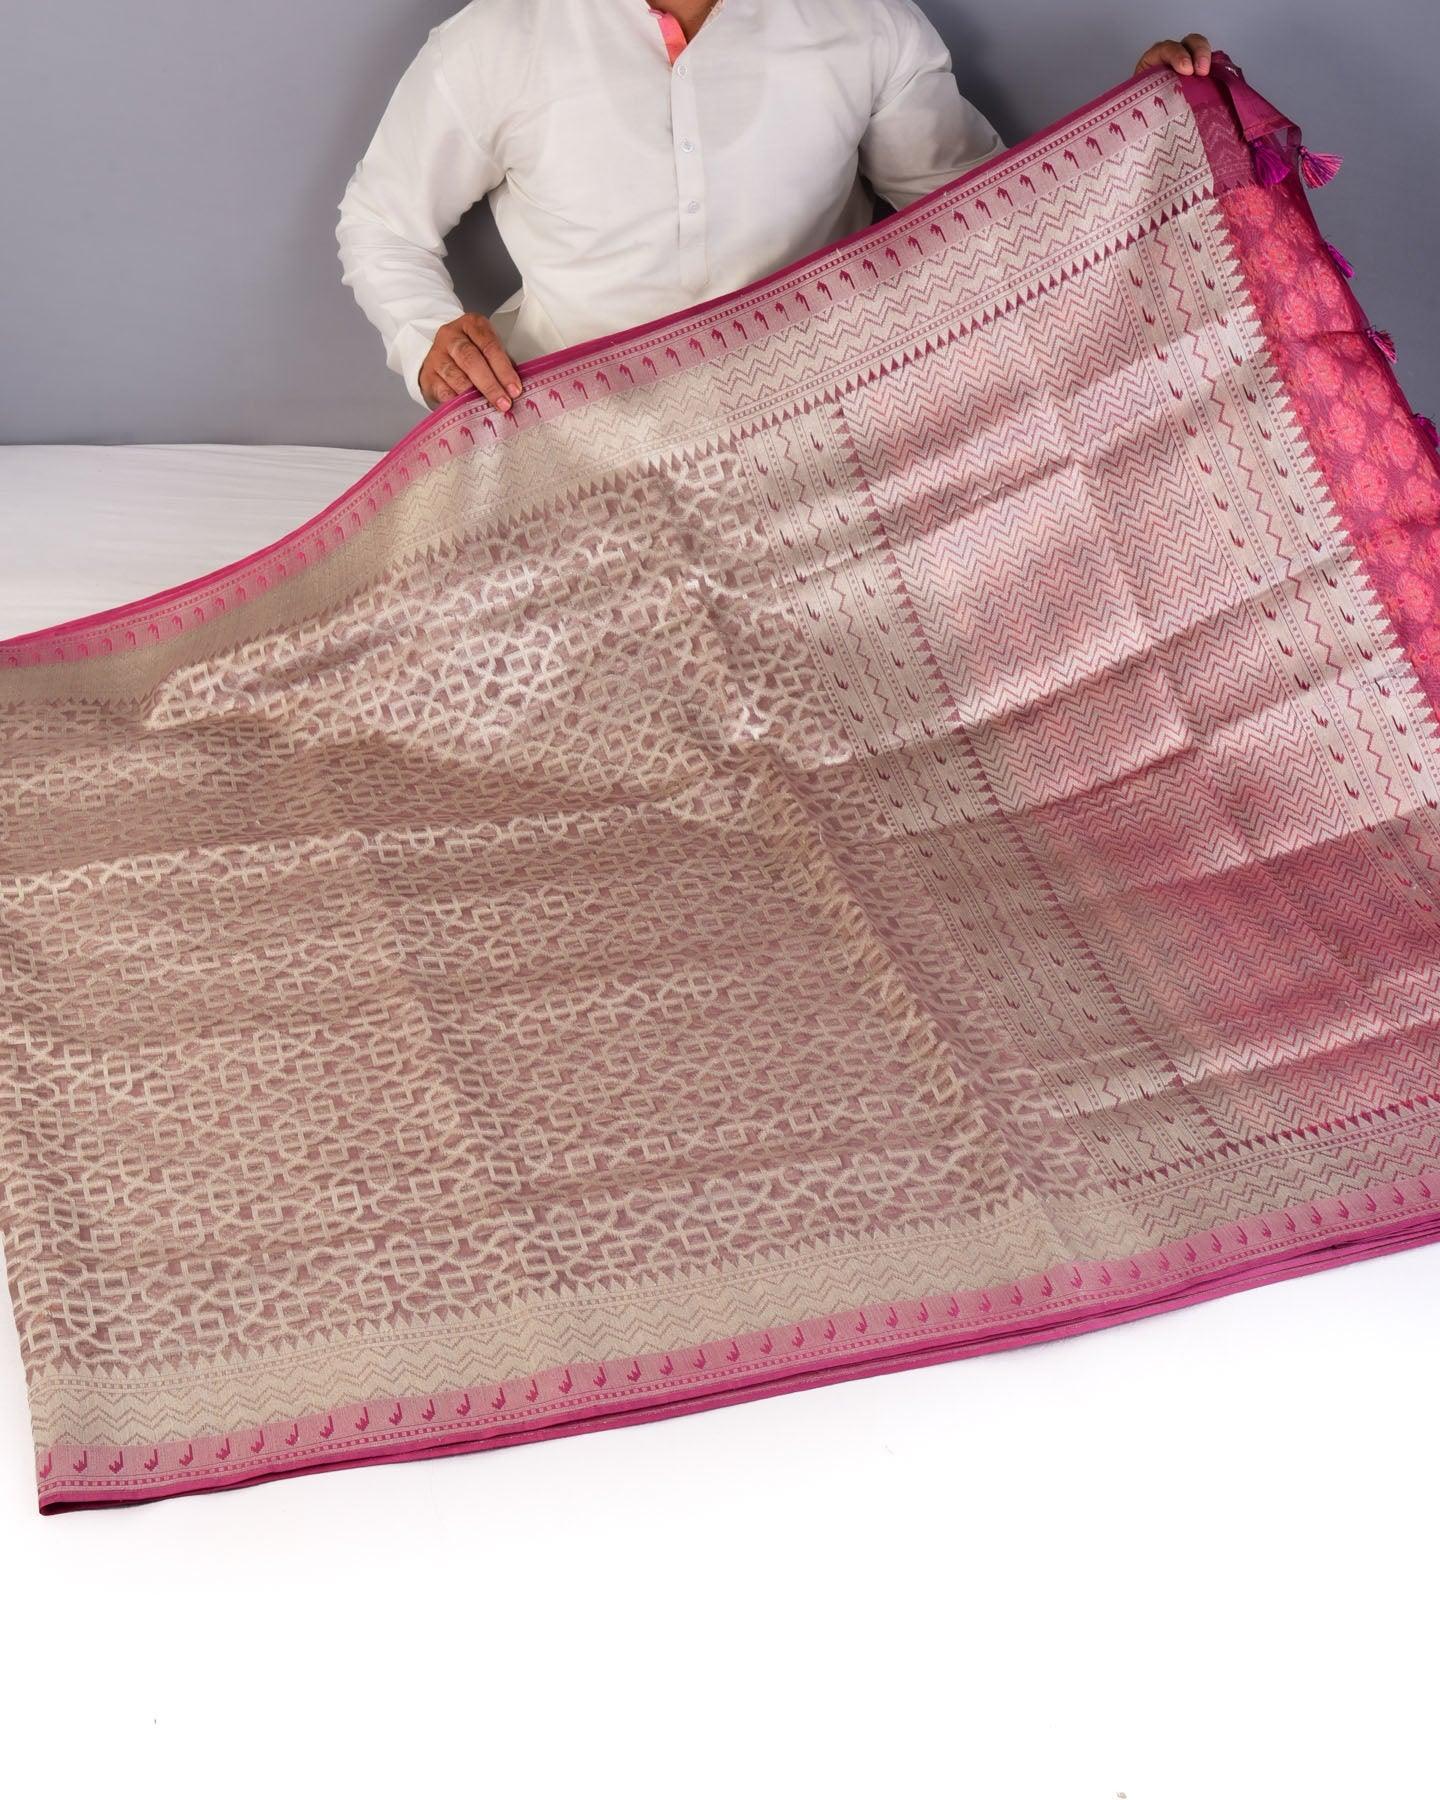 Rosy Brown Banarasi Geometric Grids Silver Zari Cutwork Brocade Handwoven Kora Silk Saree with Brocade Blouse Piece - By HolyWeaves, Benares